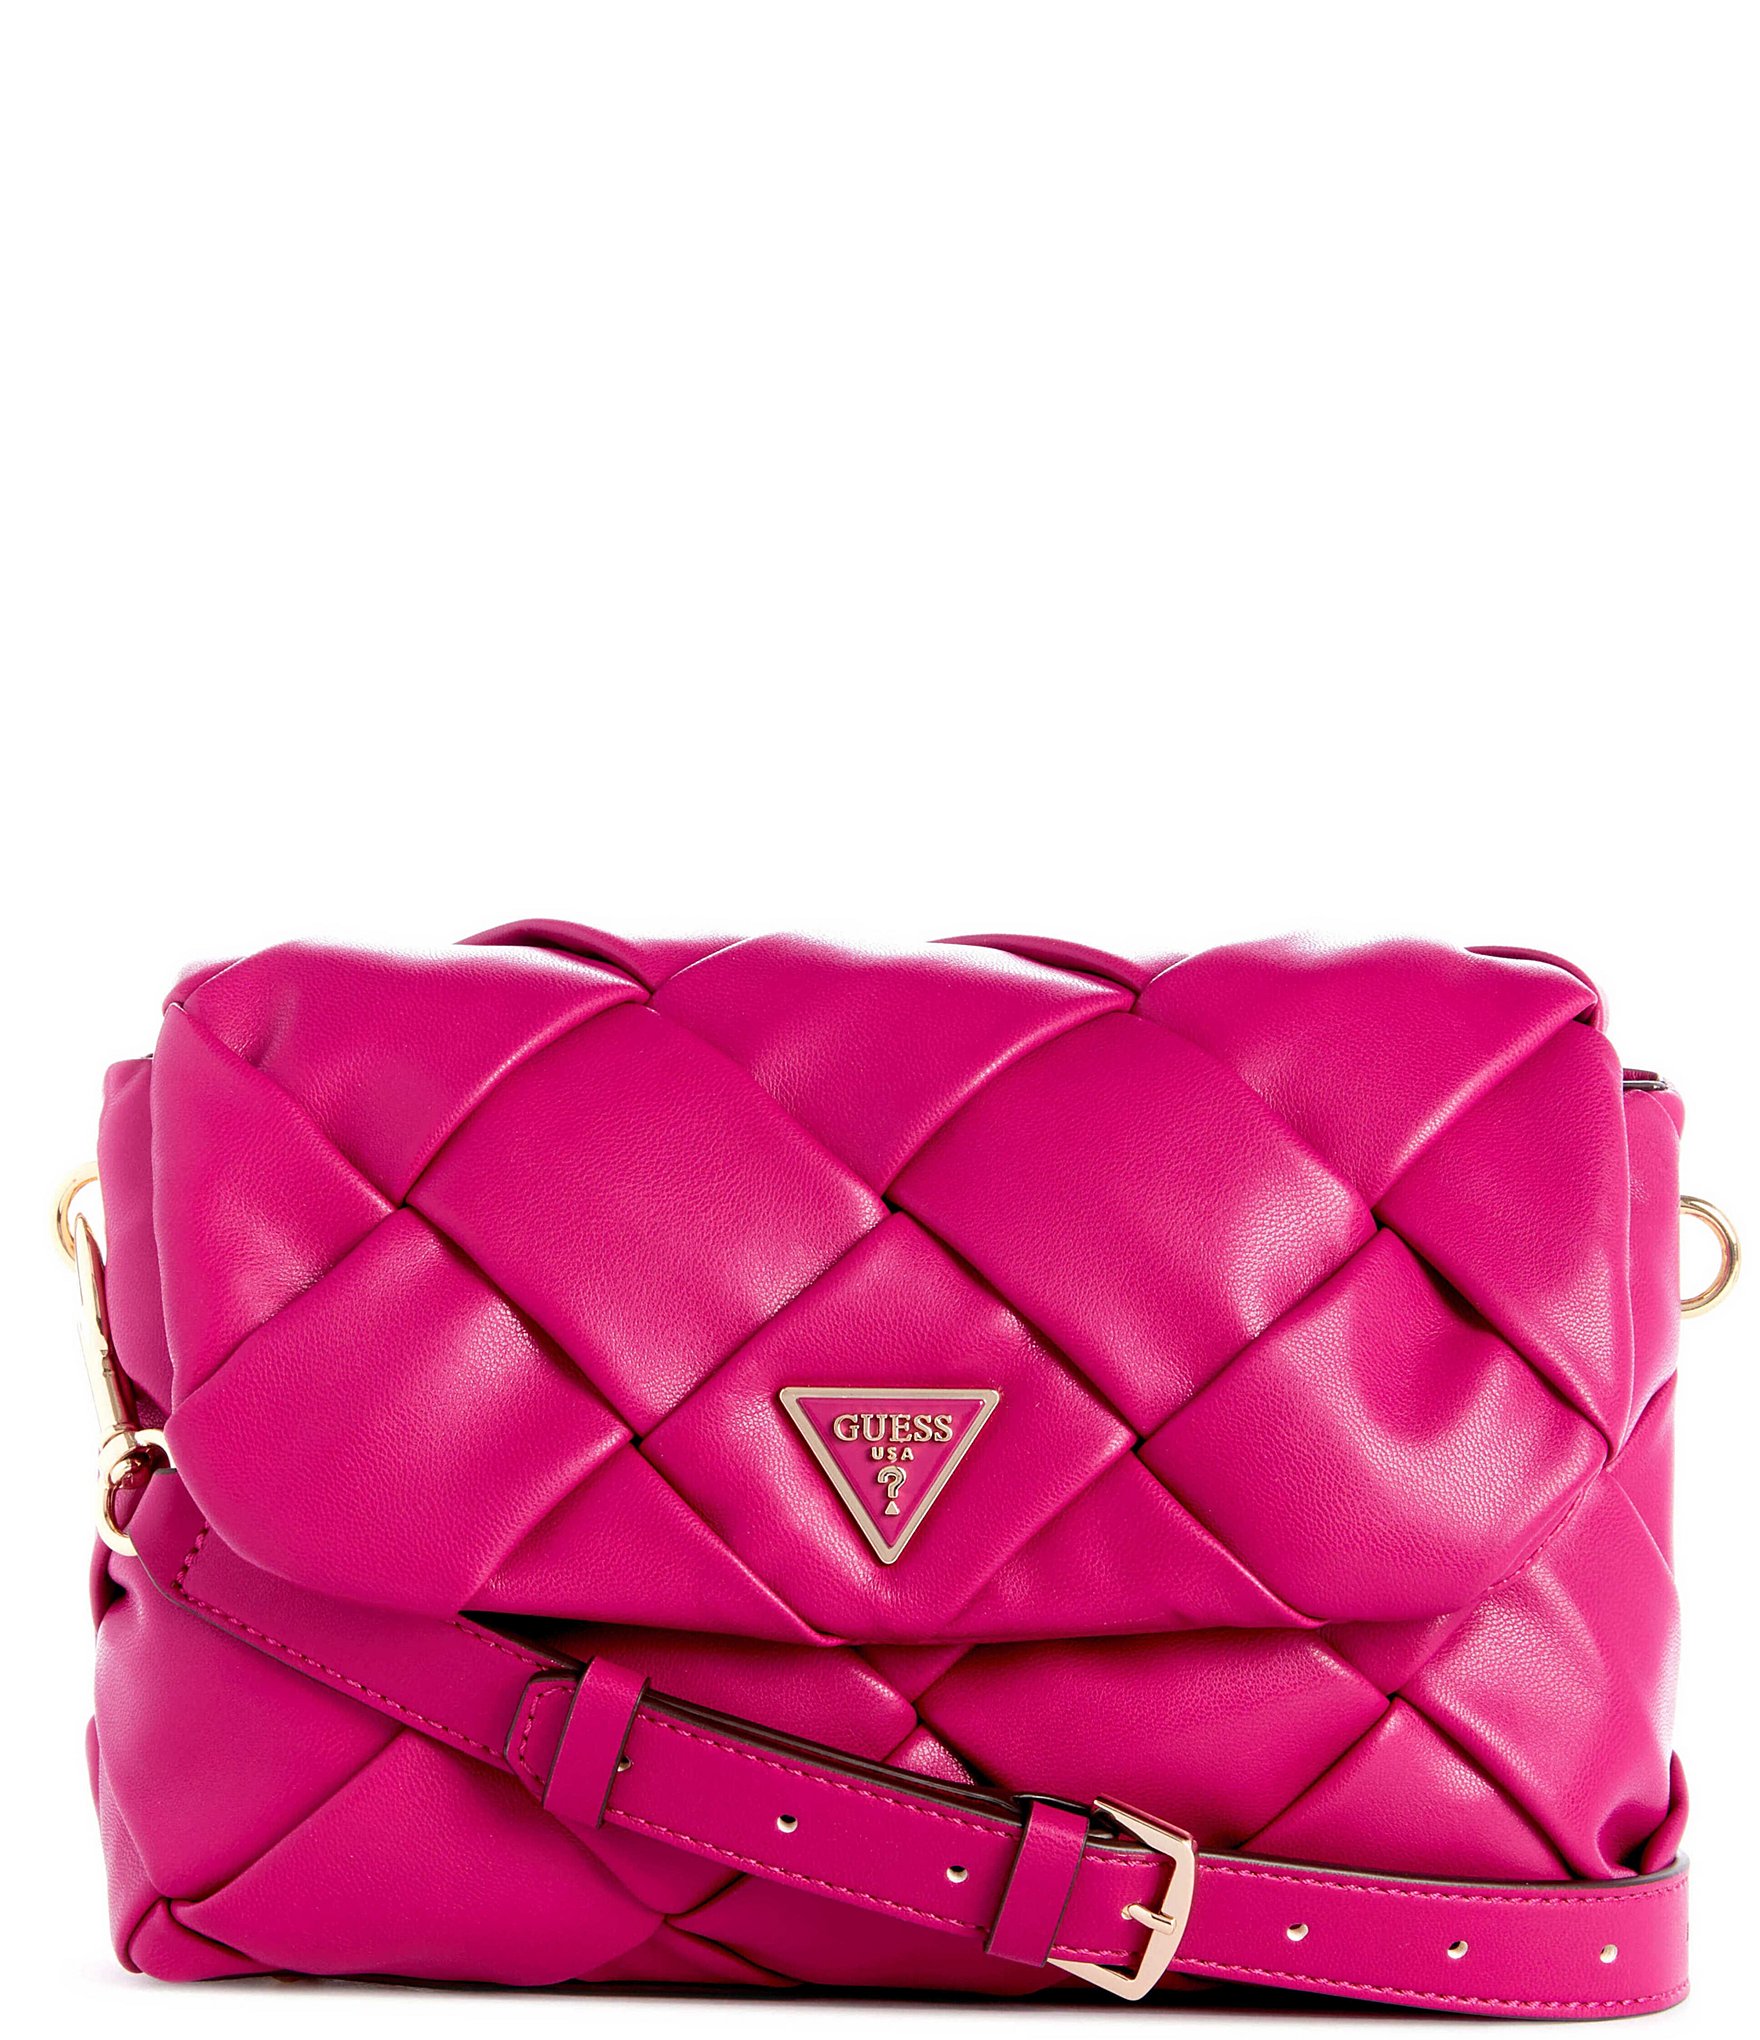 Prada System Nappa Leather Patchwork Bag In Violet